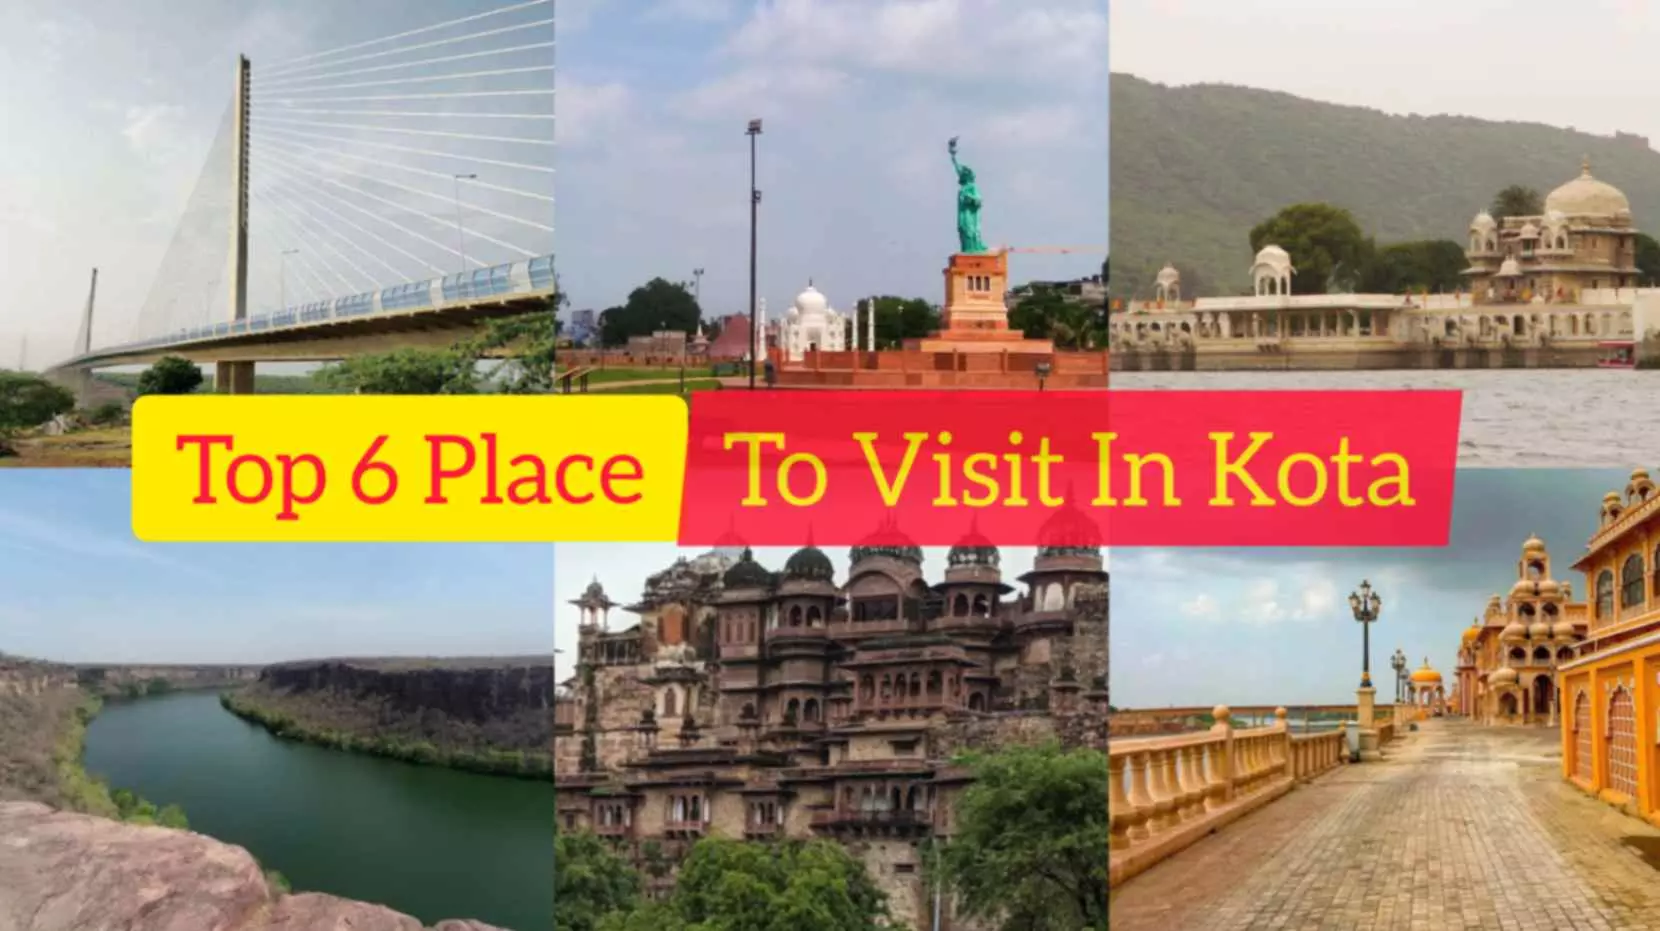 Top 6 Place To Visit In Kota